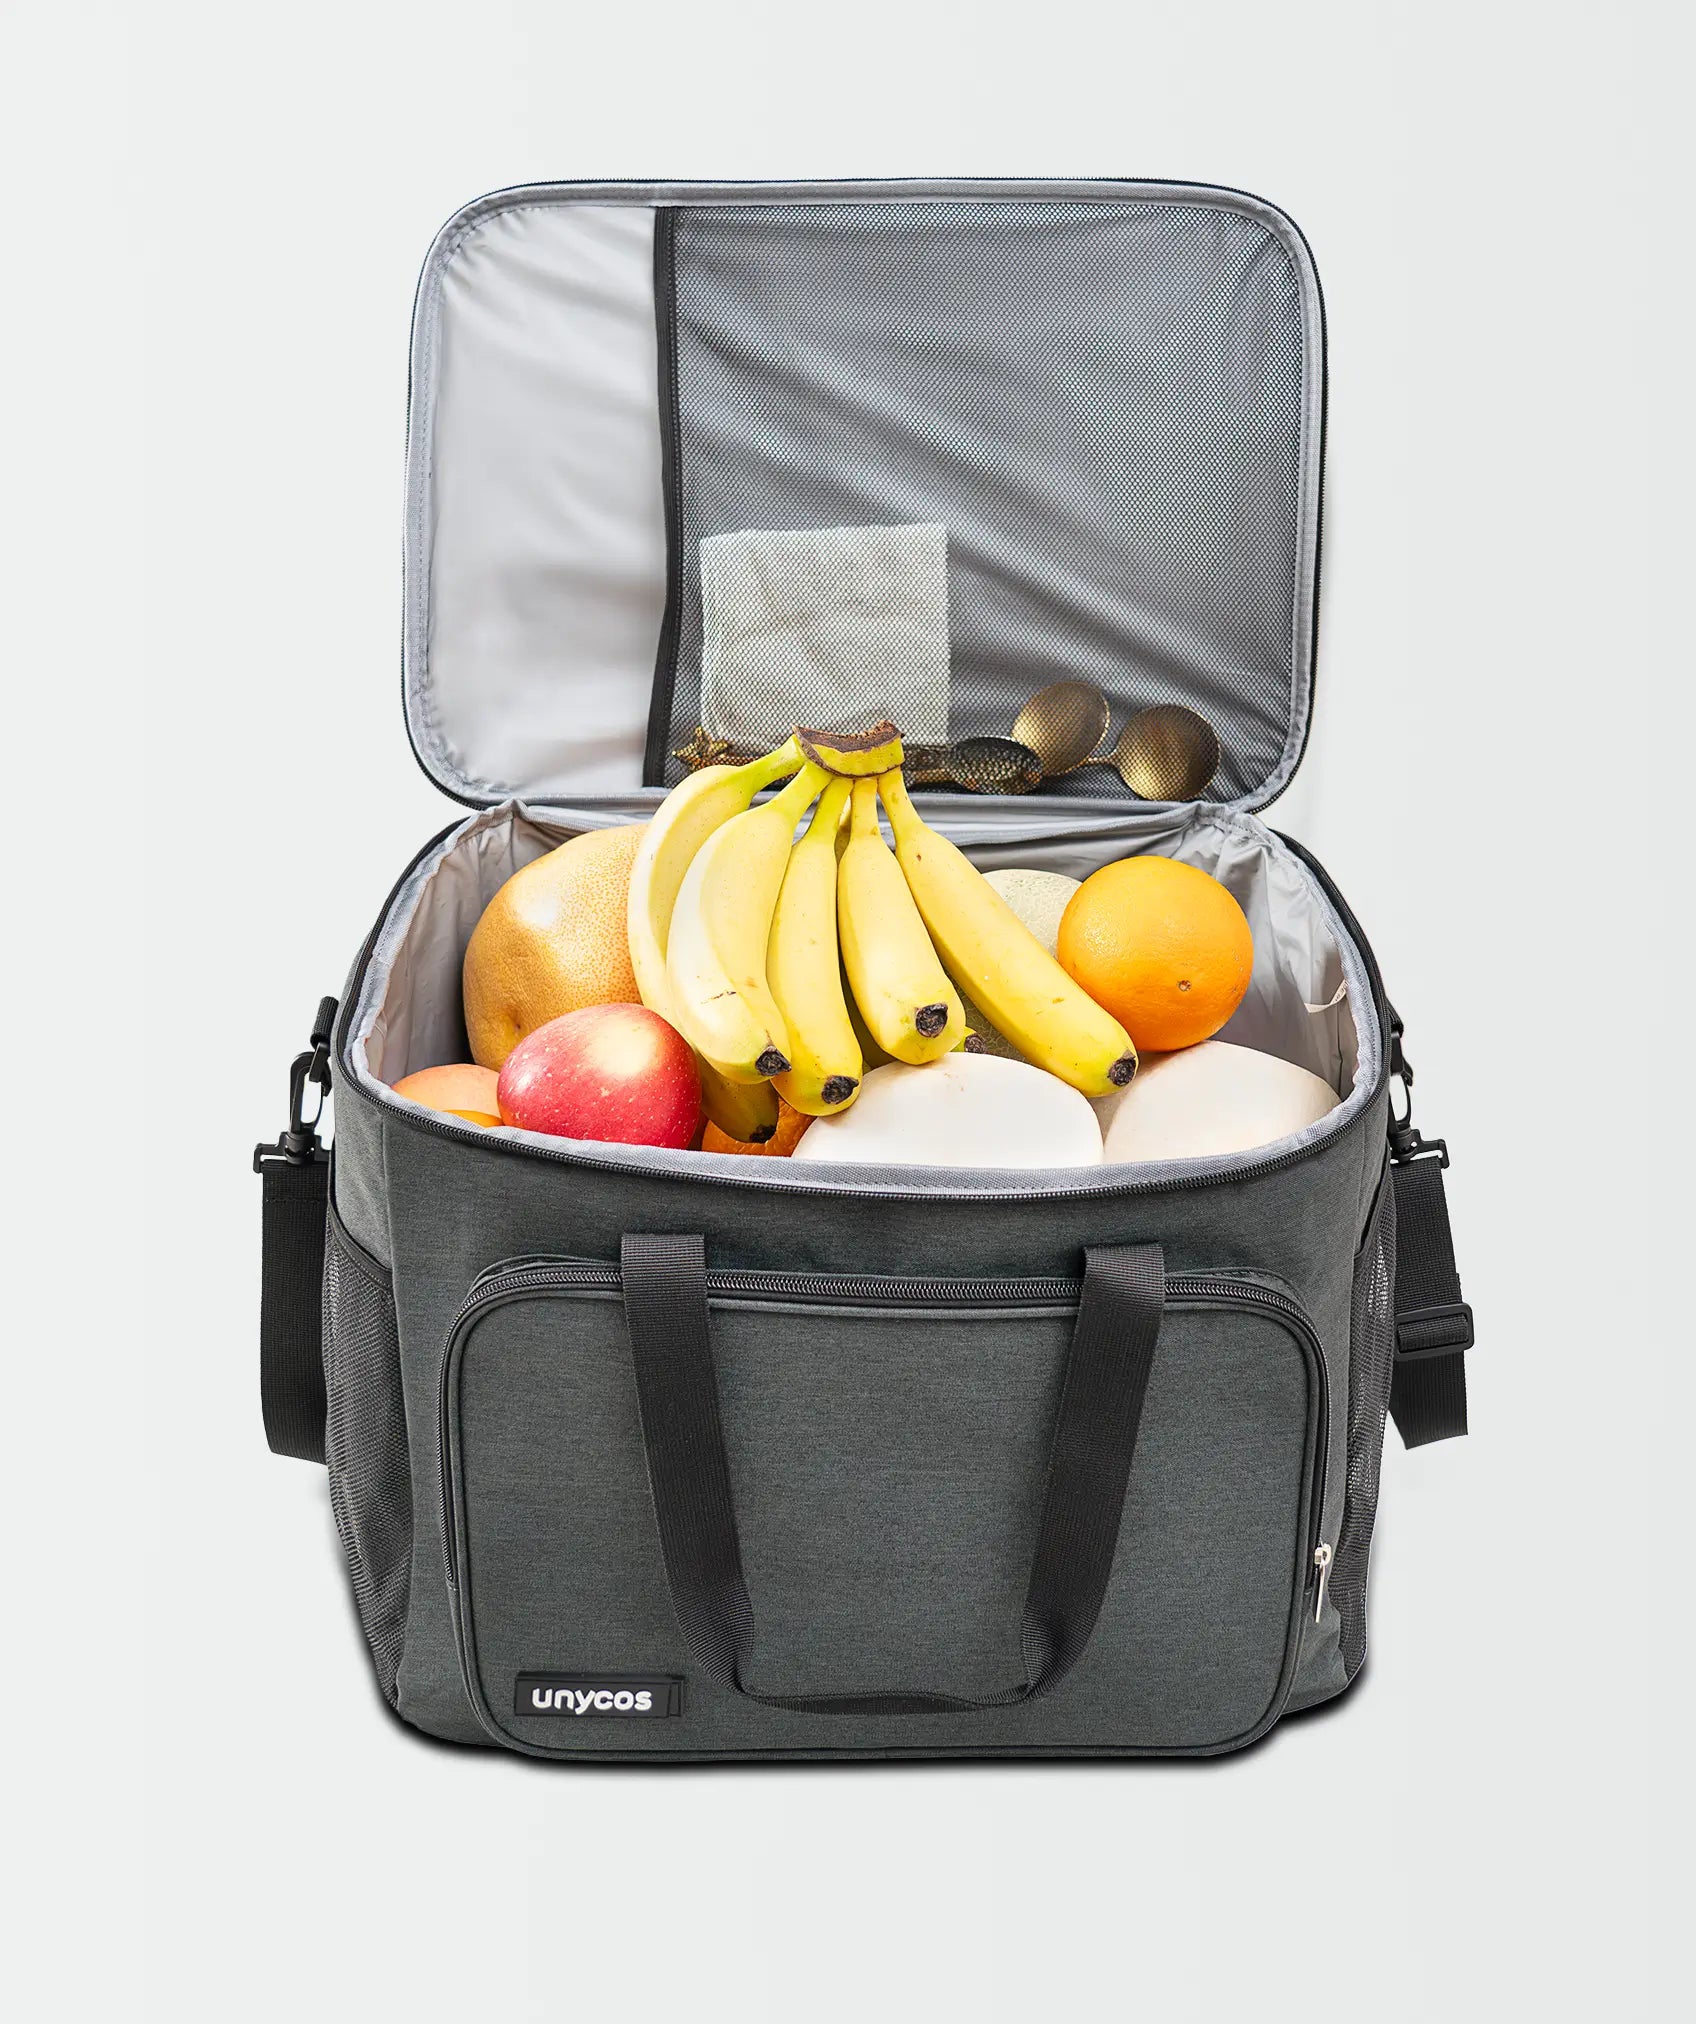 Bolsa térmica porta alimentos de 40L: lunch box impermeable, hermética e isotérmica